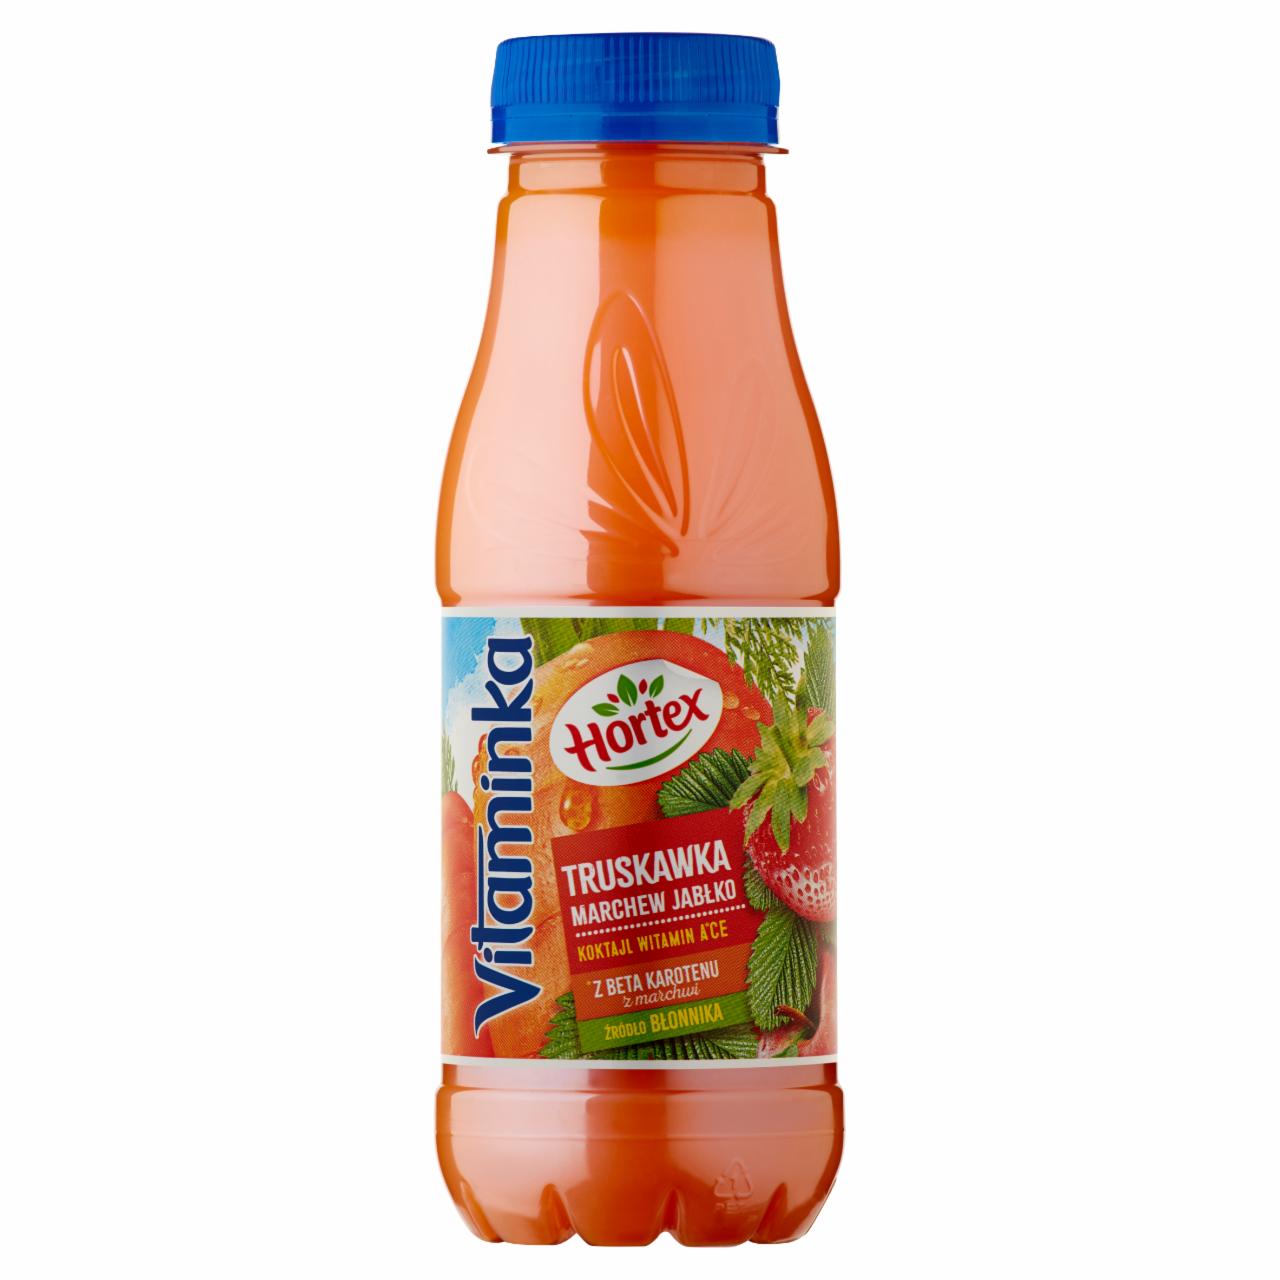 Zdjęcia - Hortex Vitaminka Sok jabłko marchew truskawka 300 ml